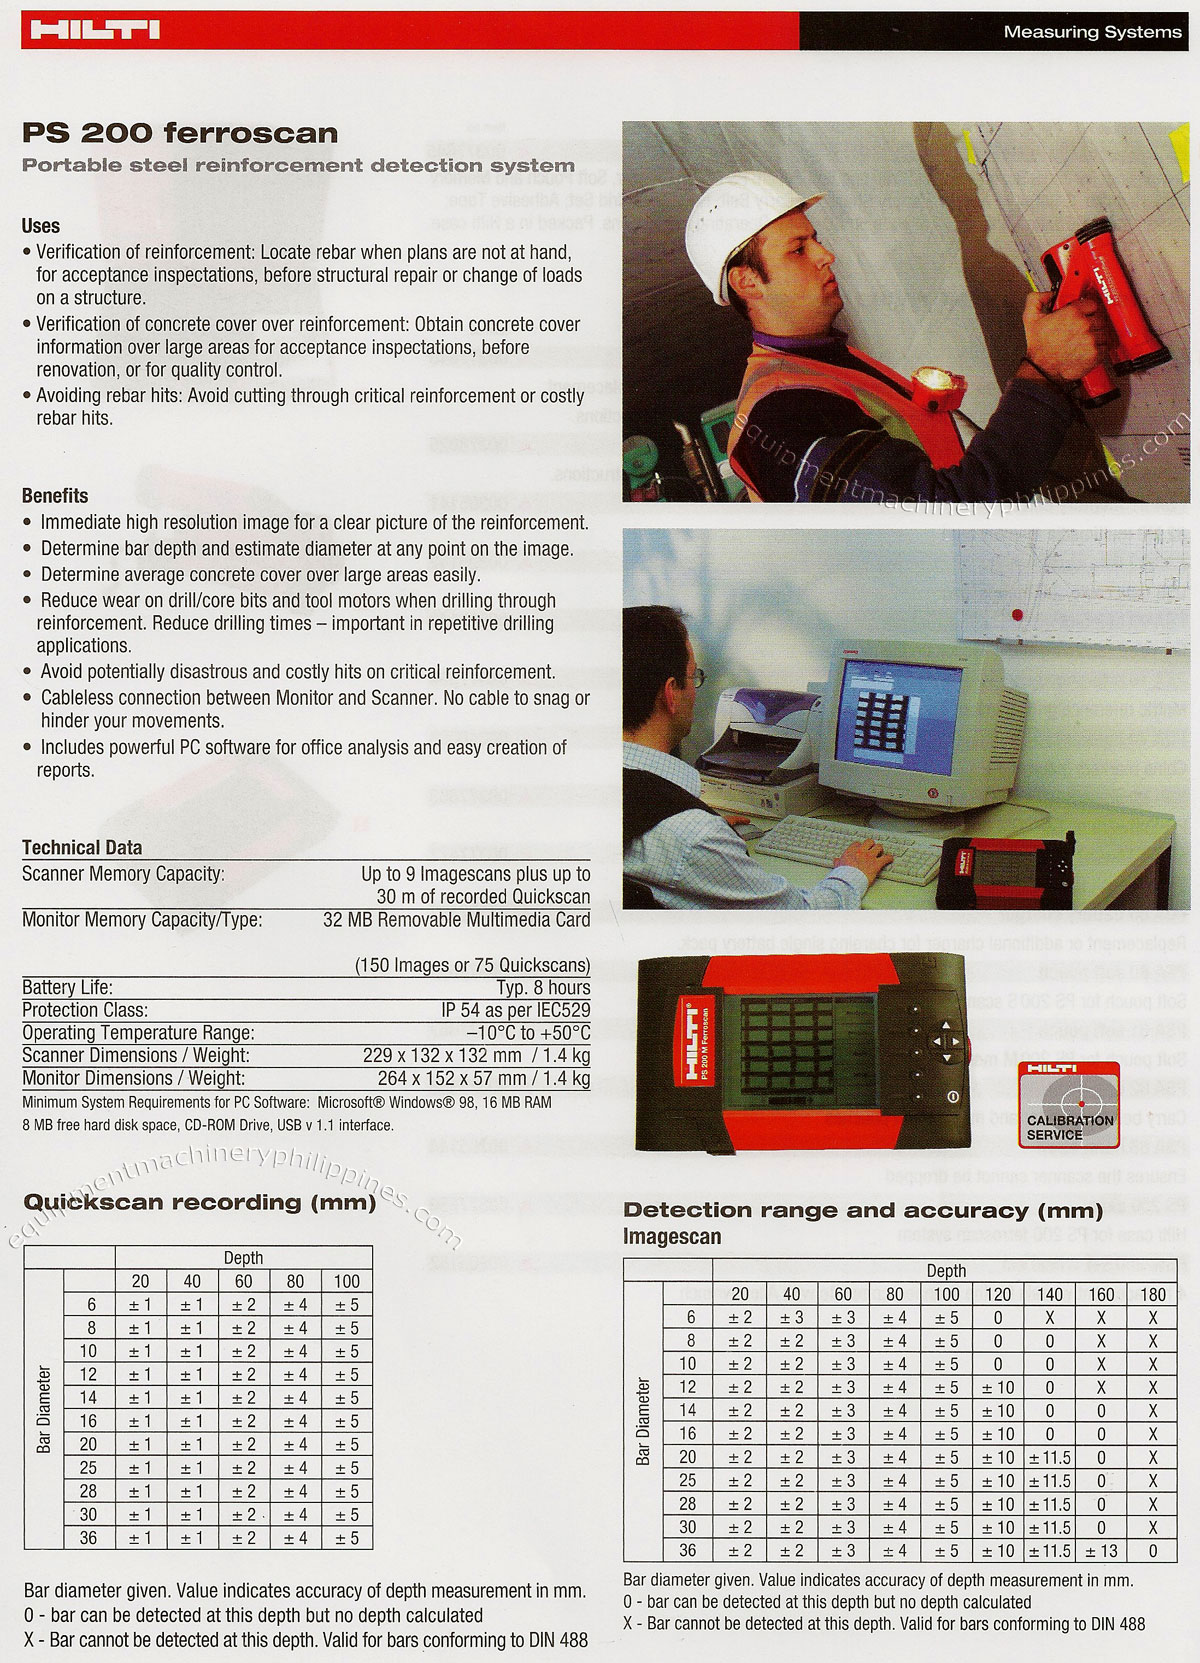 PS 200 Ferroscan - Portable Steel Reinforcement Detection System